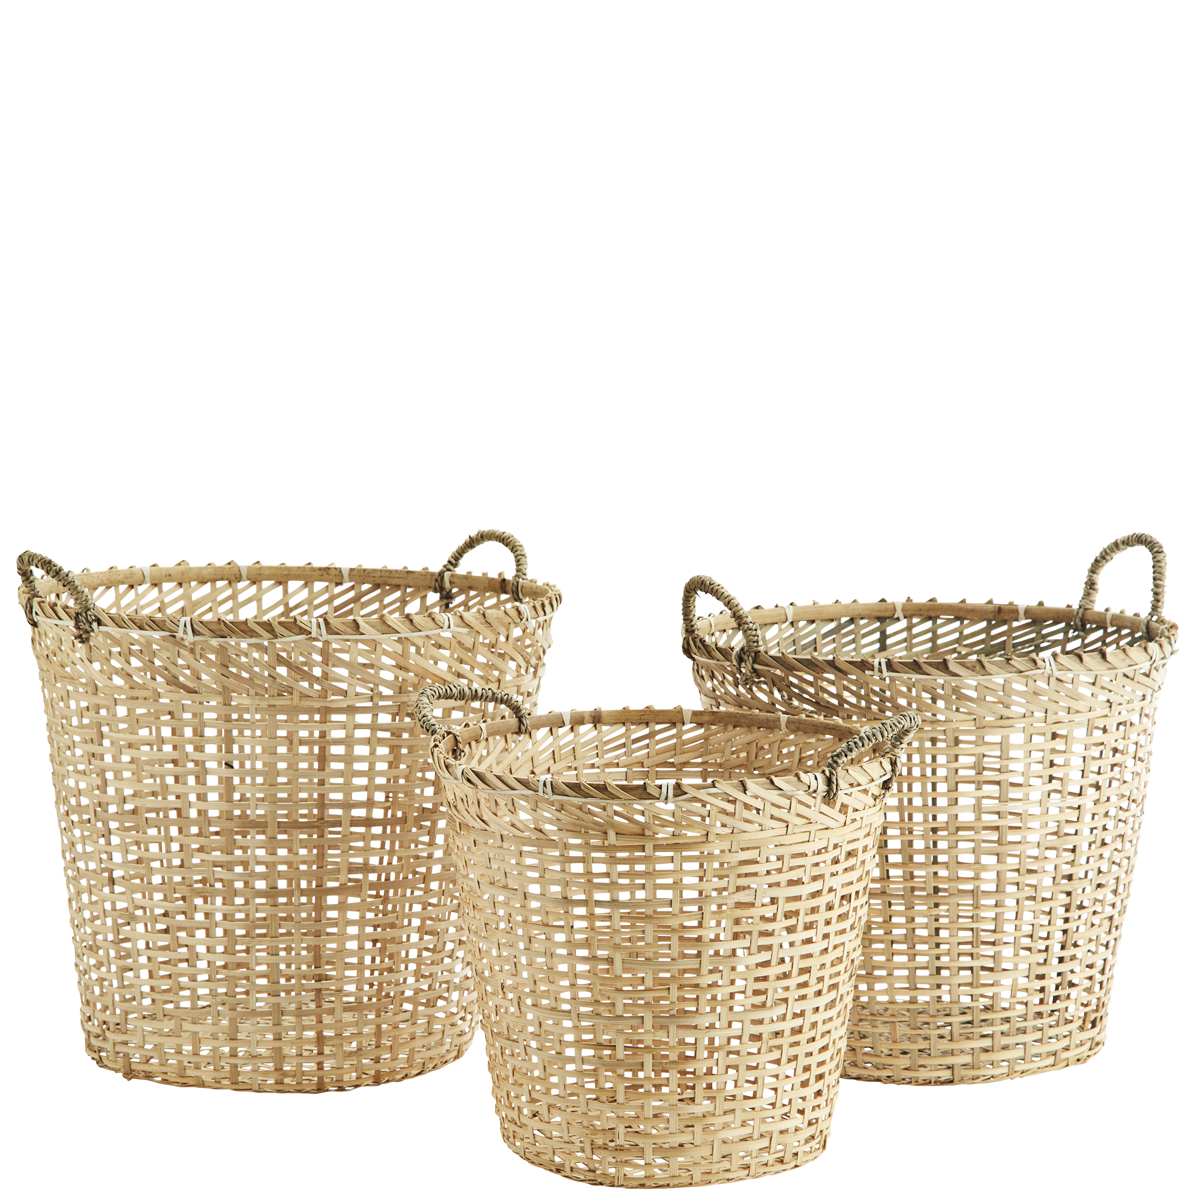 Round bamboo baskets